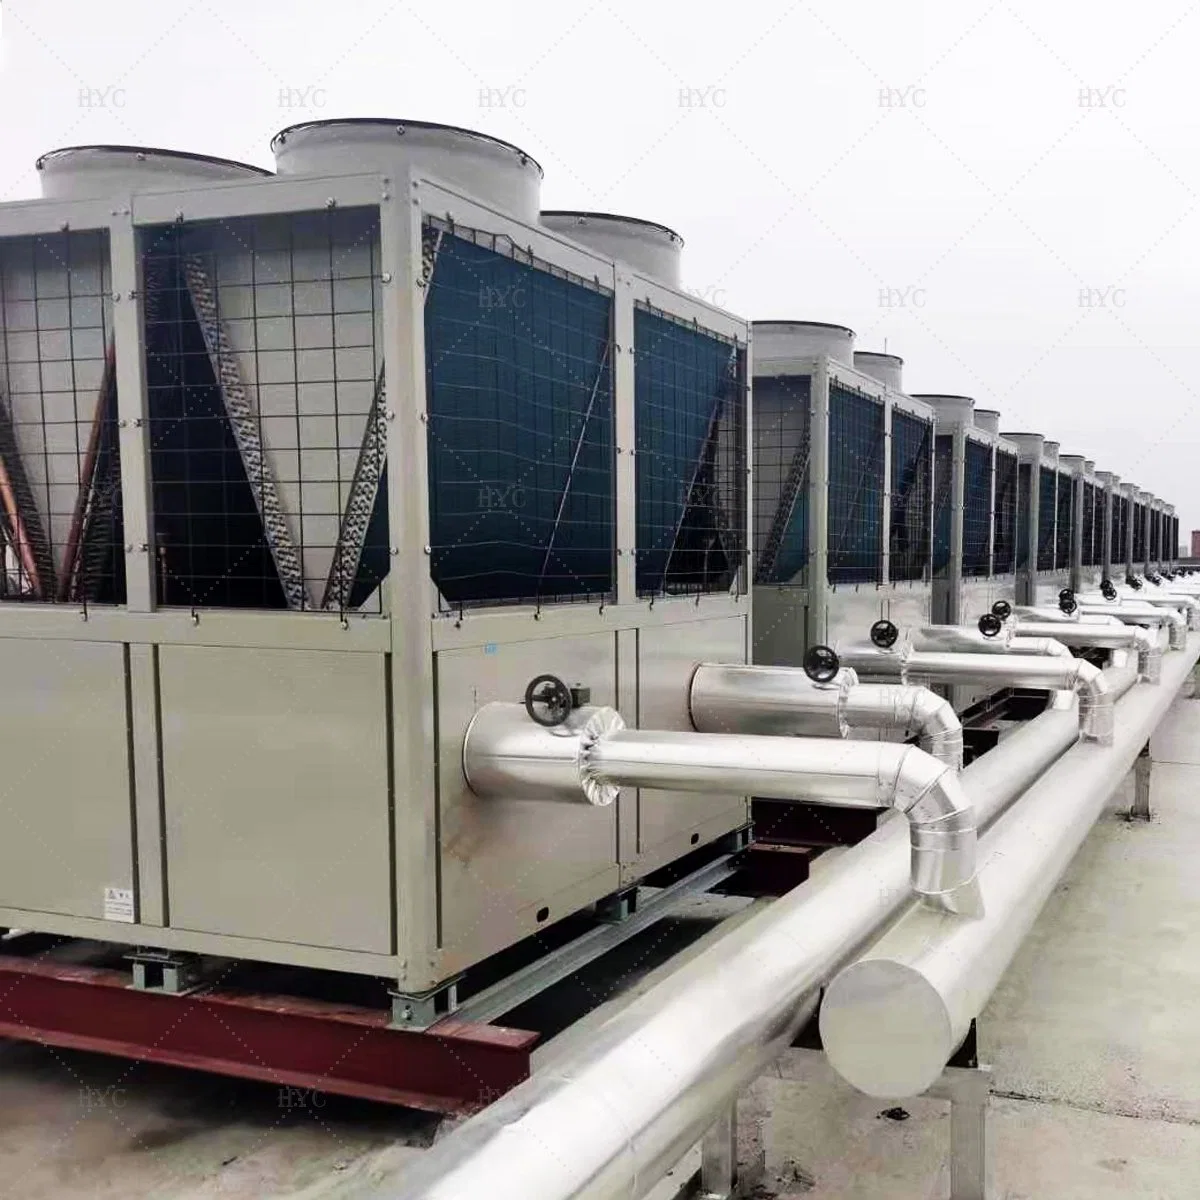 R410A Industrielle Glykol-Kühlung Luftgekühlter modularer Wasserkühler mit Copeland Kompressor (Inverter)